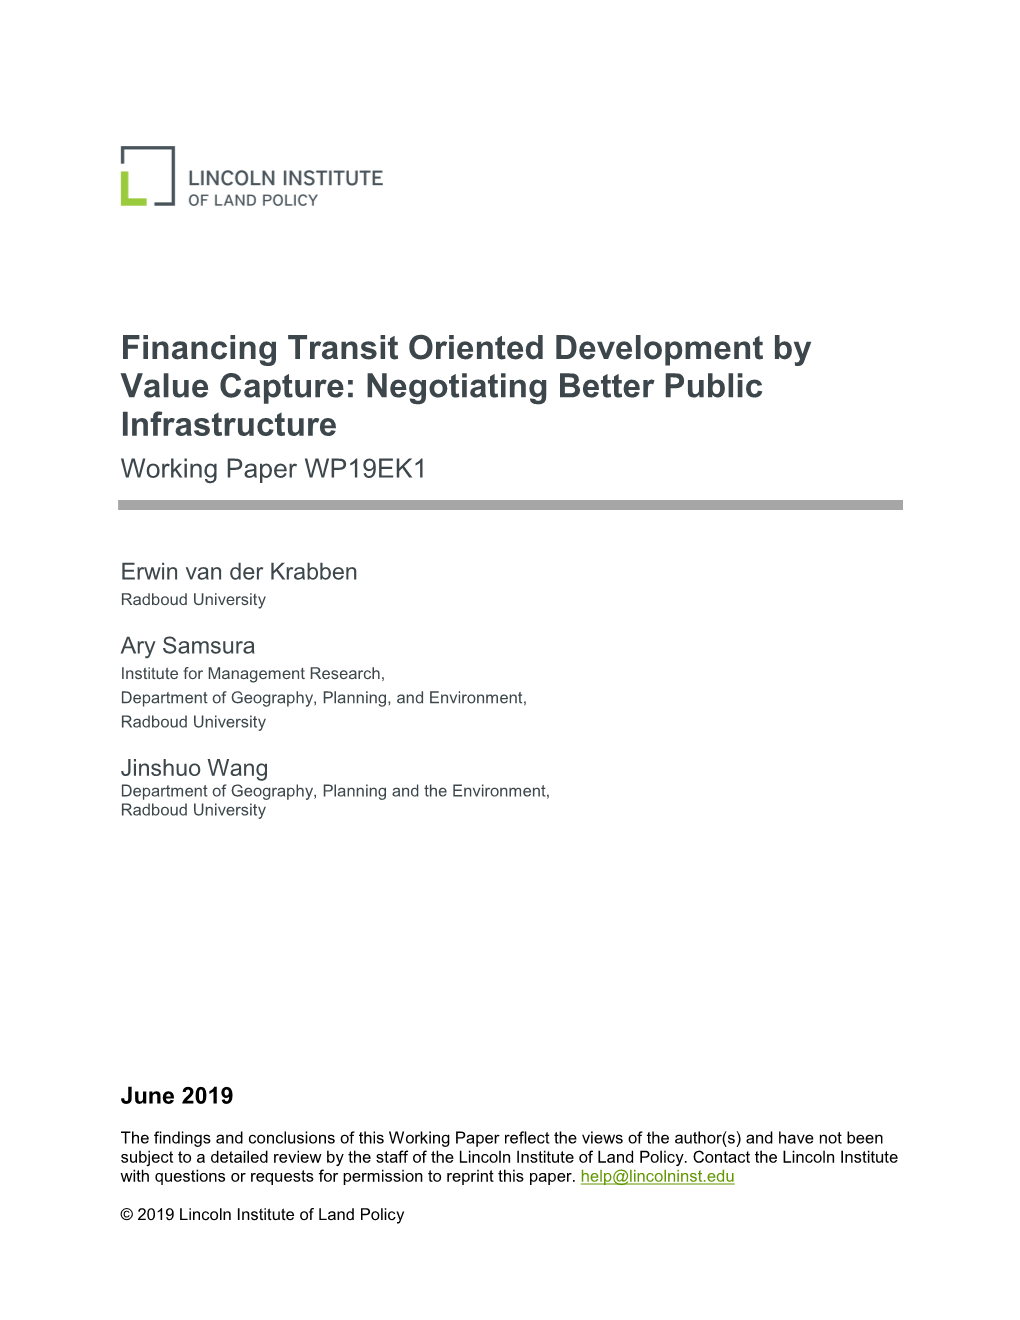 Financing Transit Oriented Development by Value Capture: Negotiating Better Public Infrastructure Working Paper WP19EK1